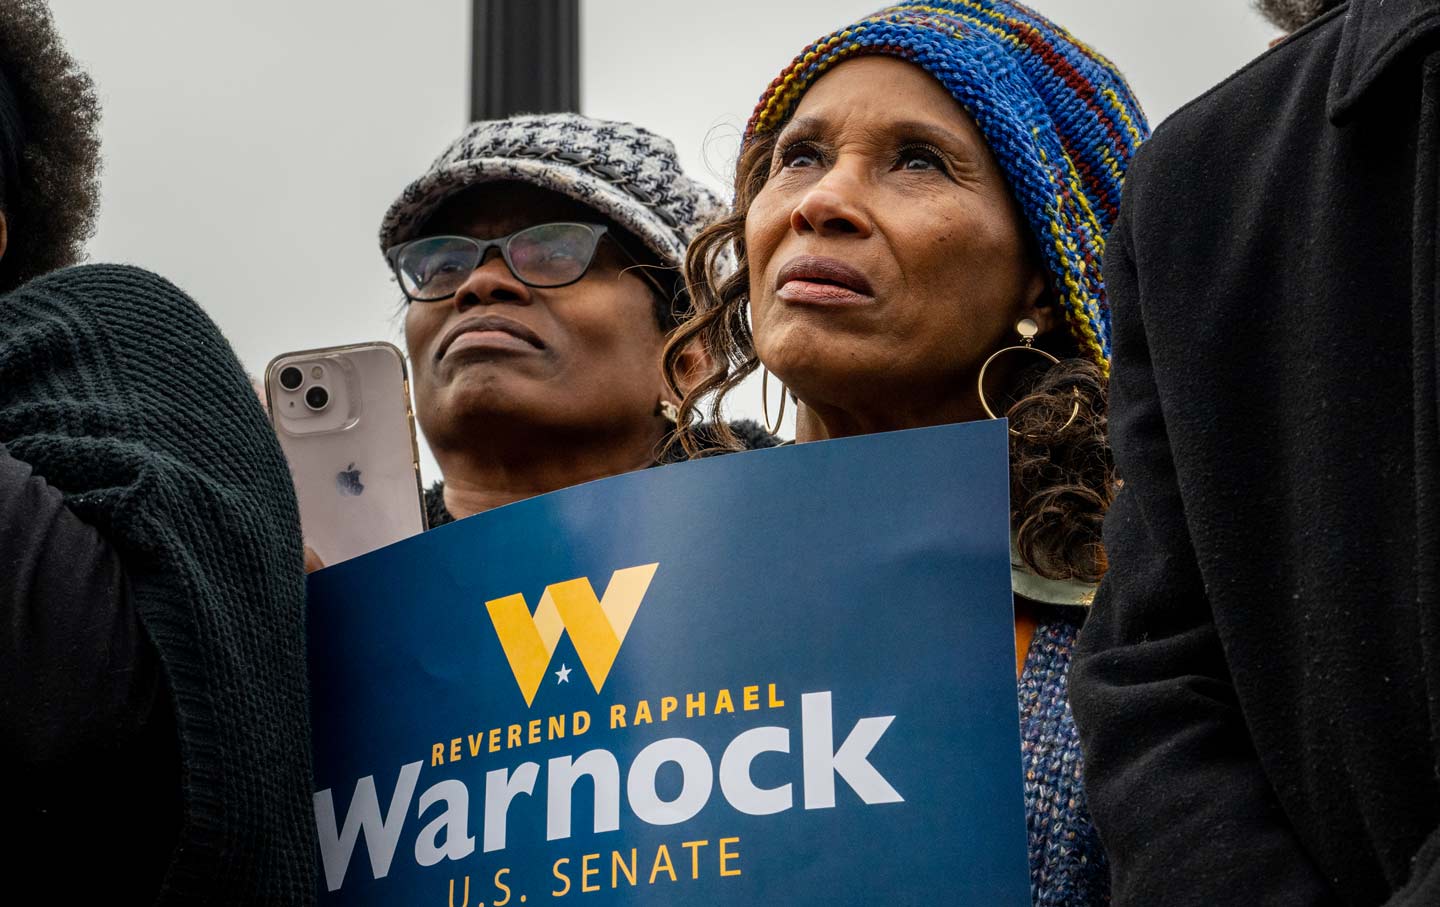 Two Black women at a rally for Sen. Raphael Warnock